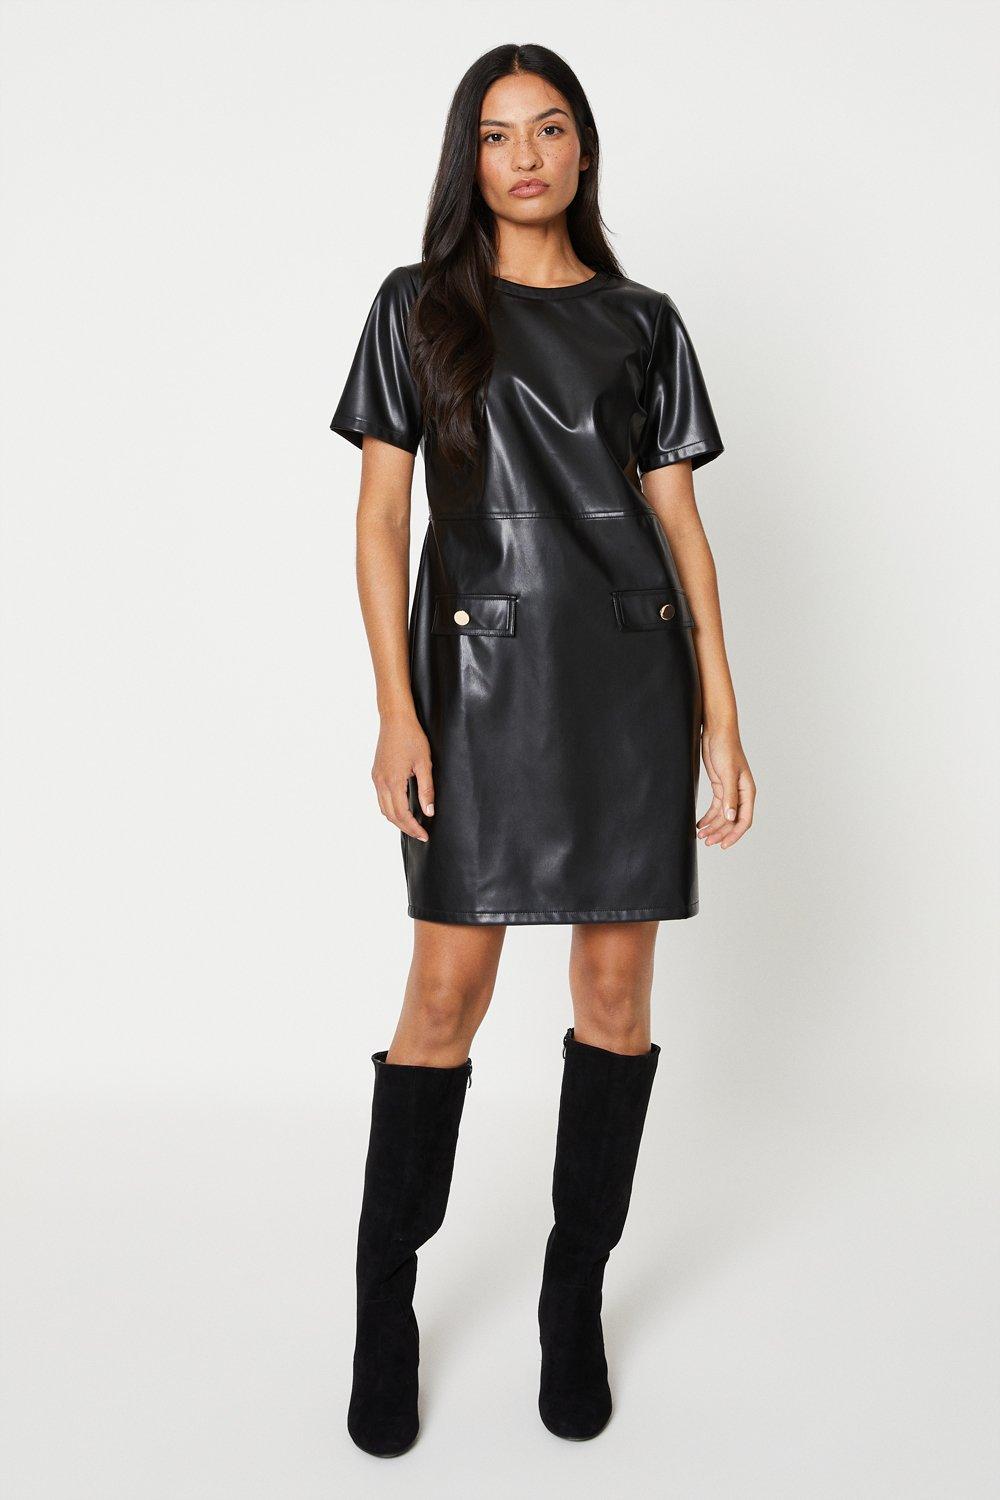 Women’s Short Sleeve Pocket Front Pu Dress - black - 18